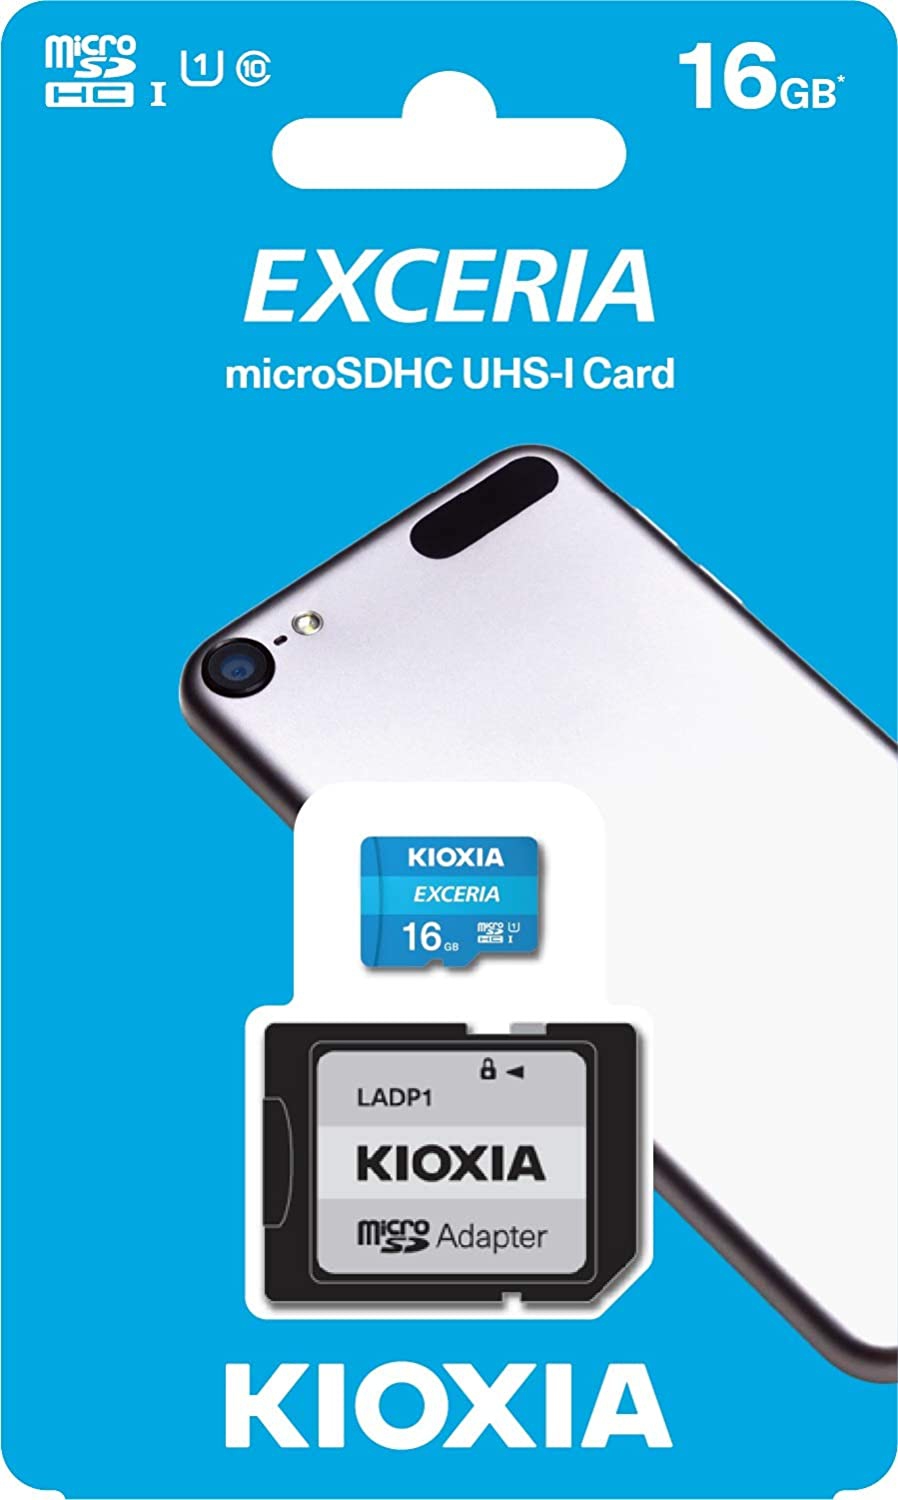 Kioxia 16GB Exceria Micro Sdhc Uhs-1 C10 100MB/SN Hafıza Kartı LMEX1L016GG2